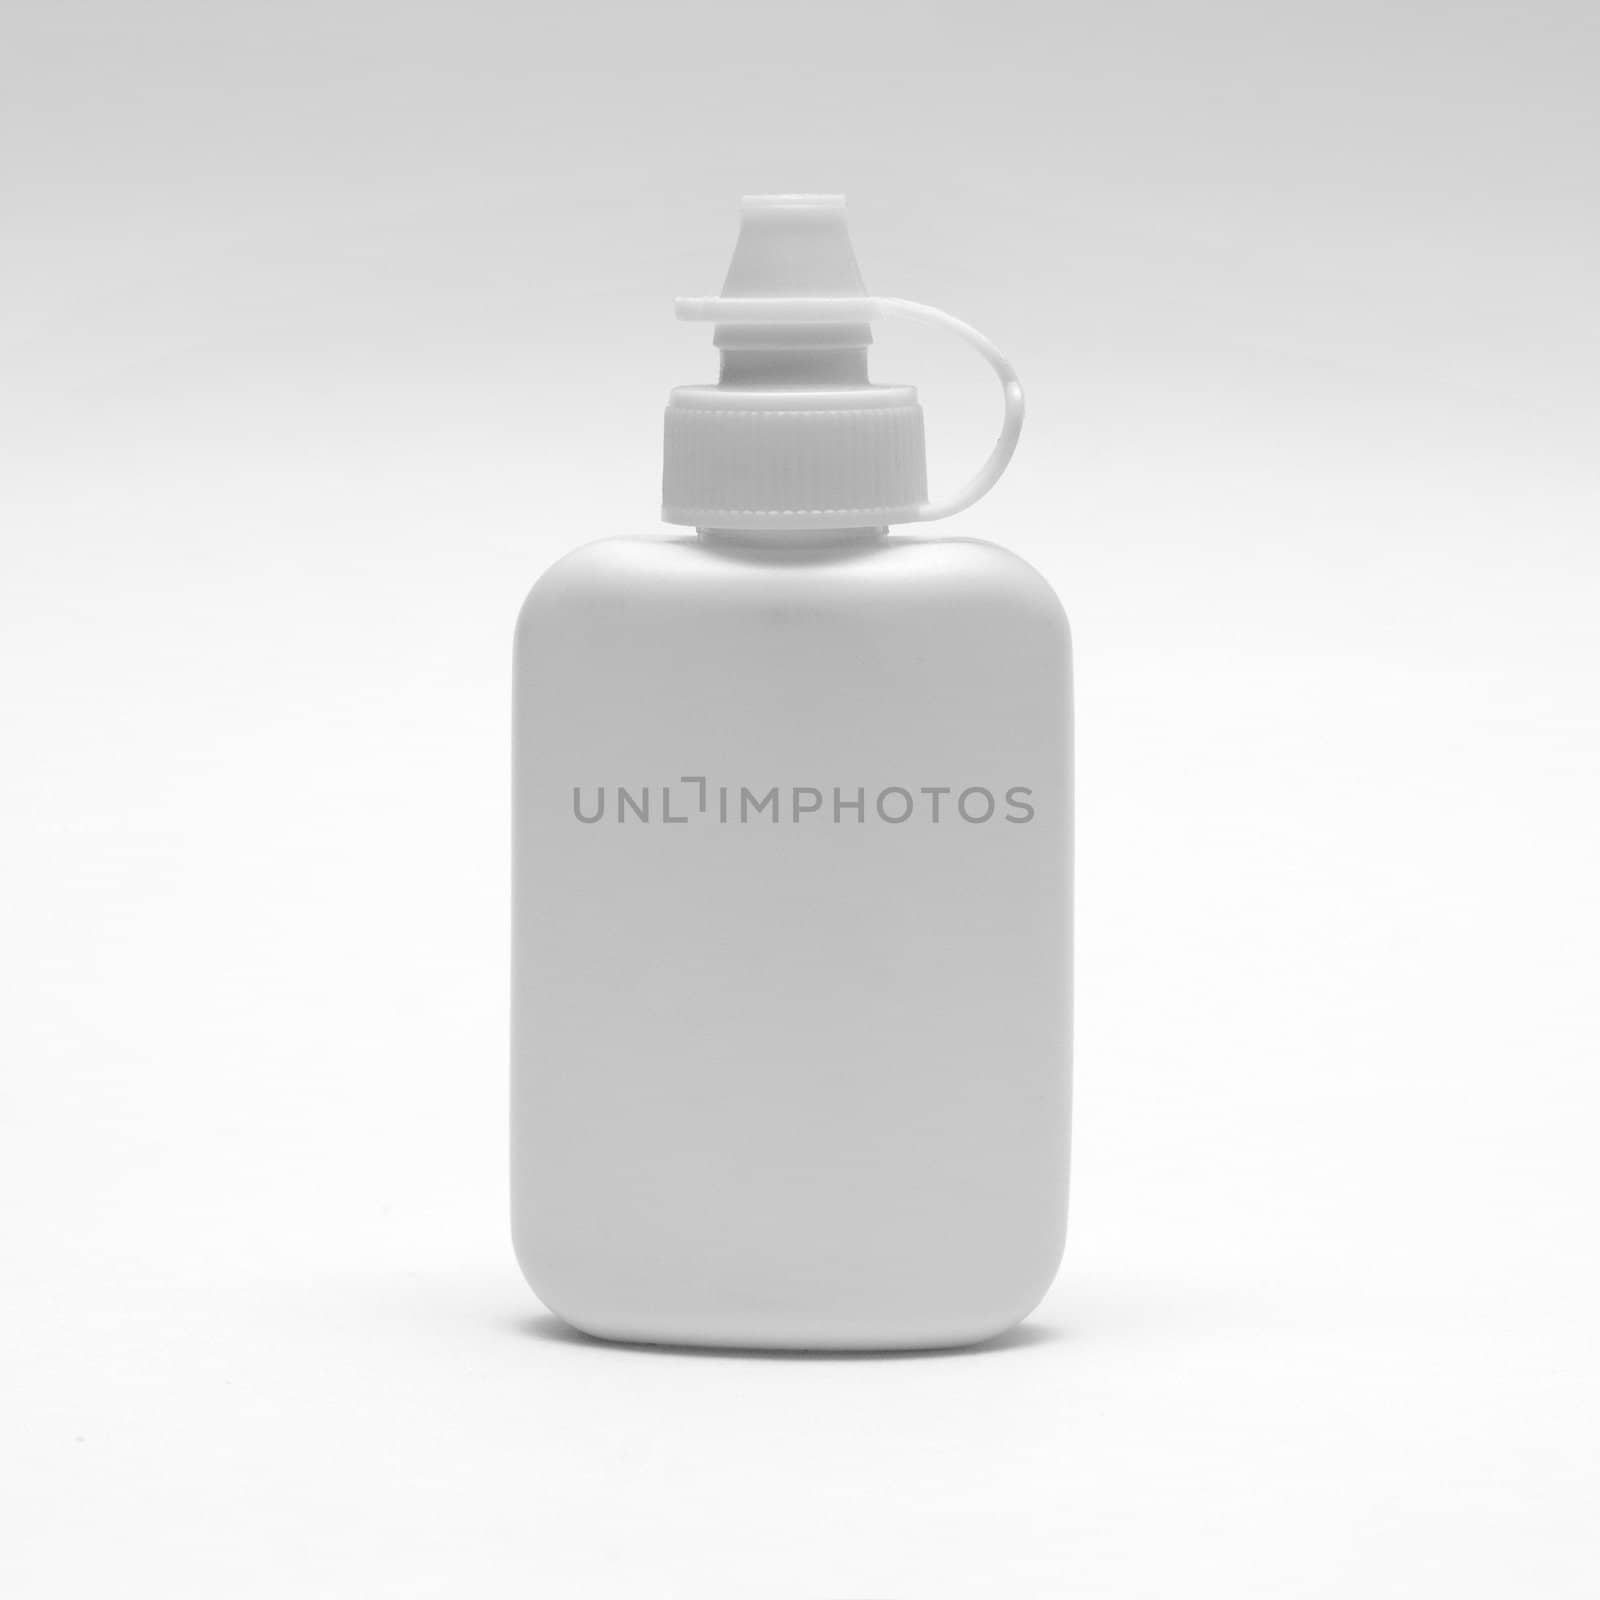 White plastic bottle isolated on white